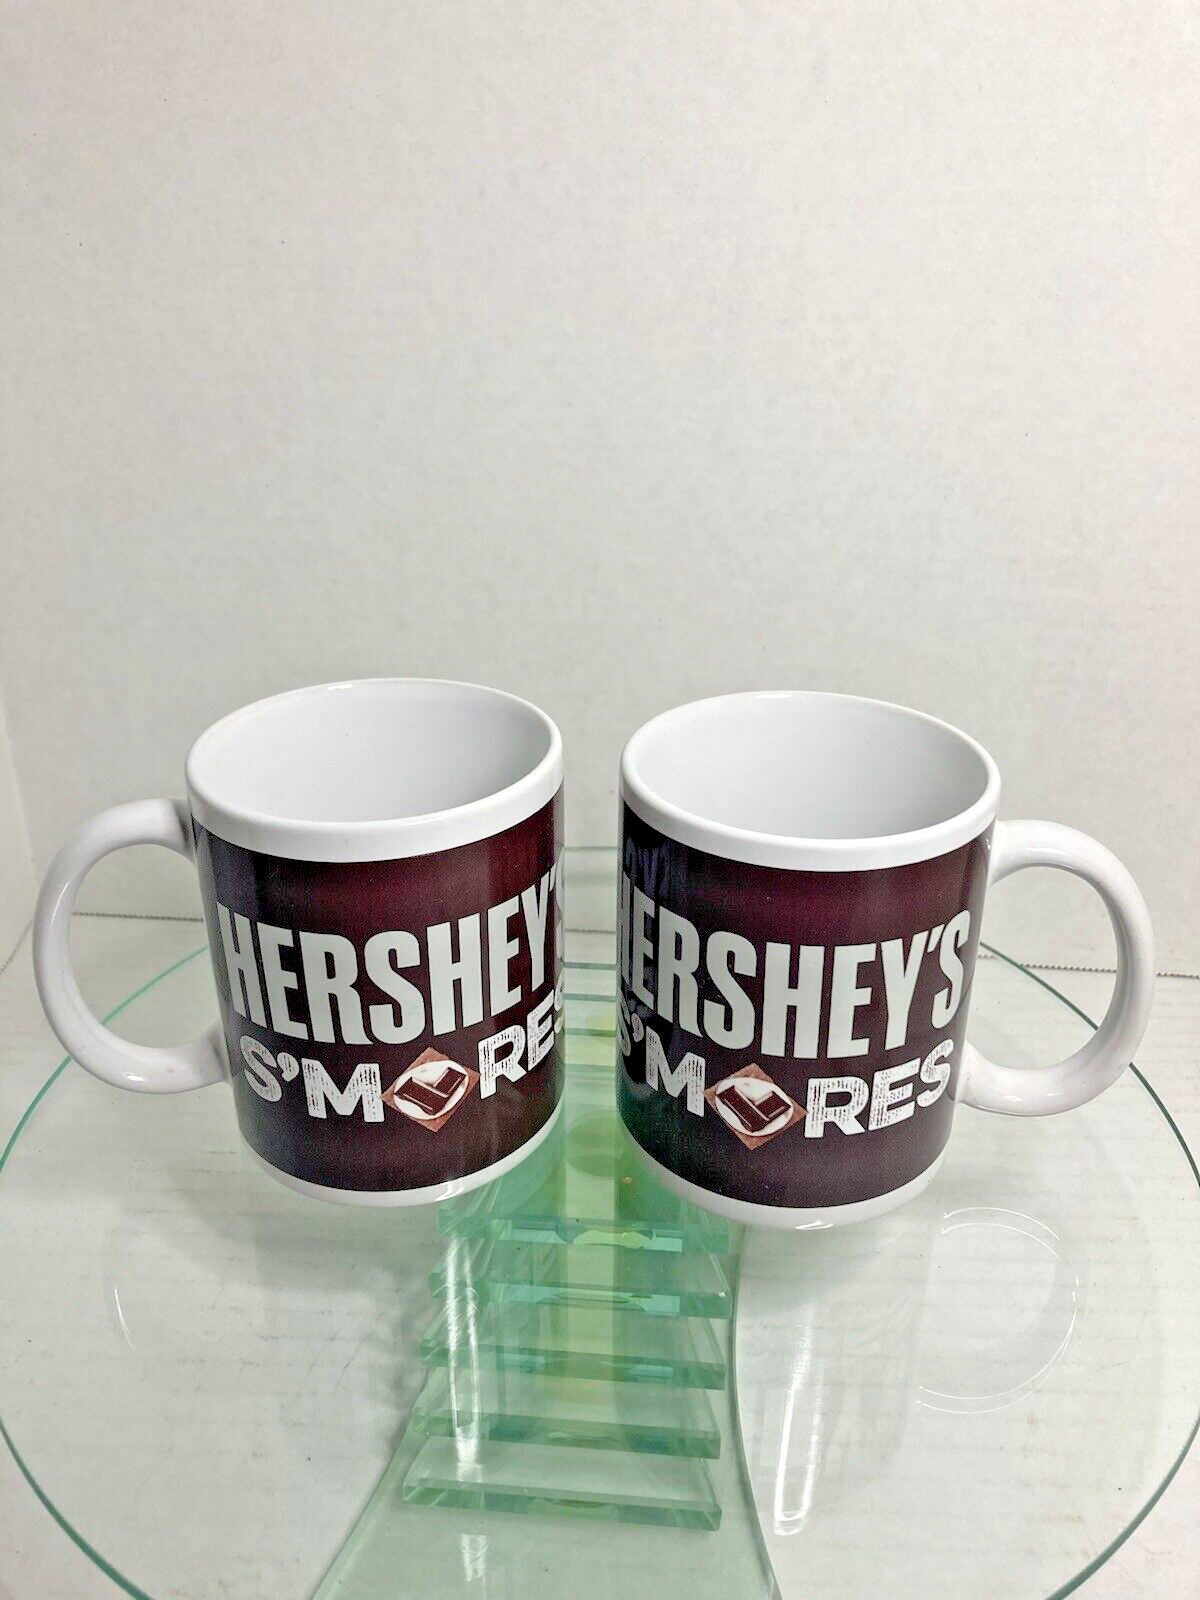 Vintage Advertising Hershey’s S’mores Coffee/Hot Chocolate/Tea Mug Cup